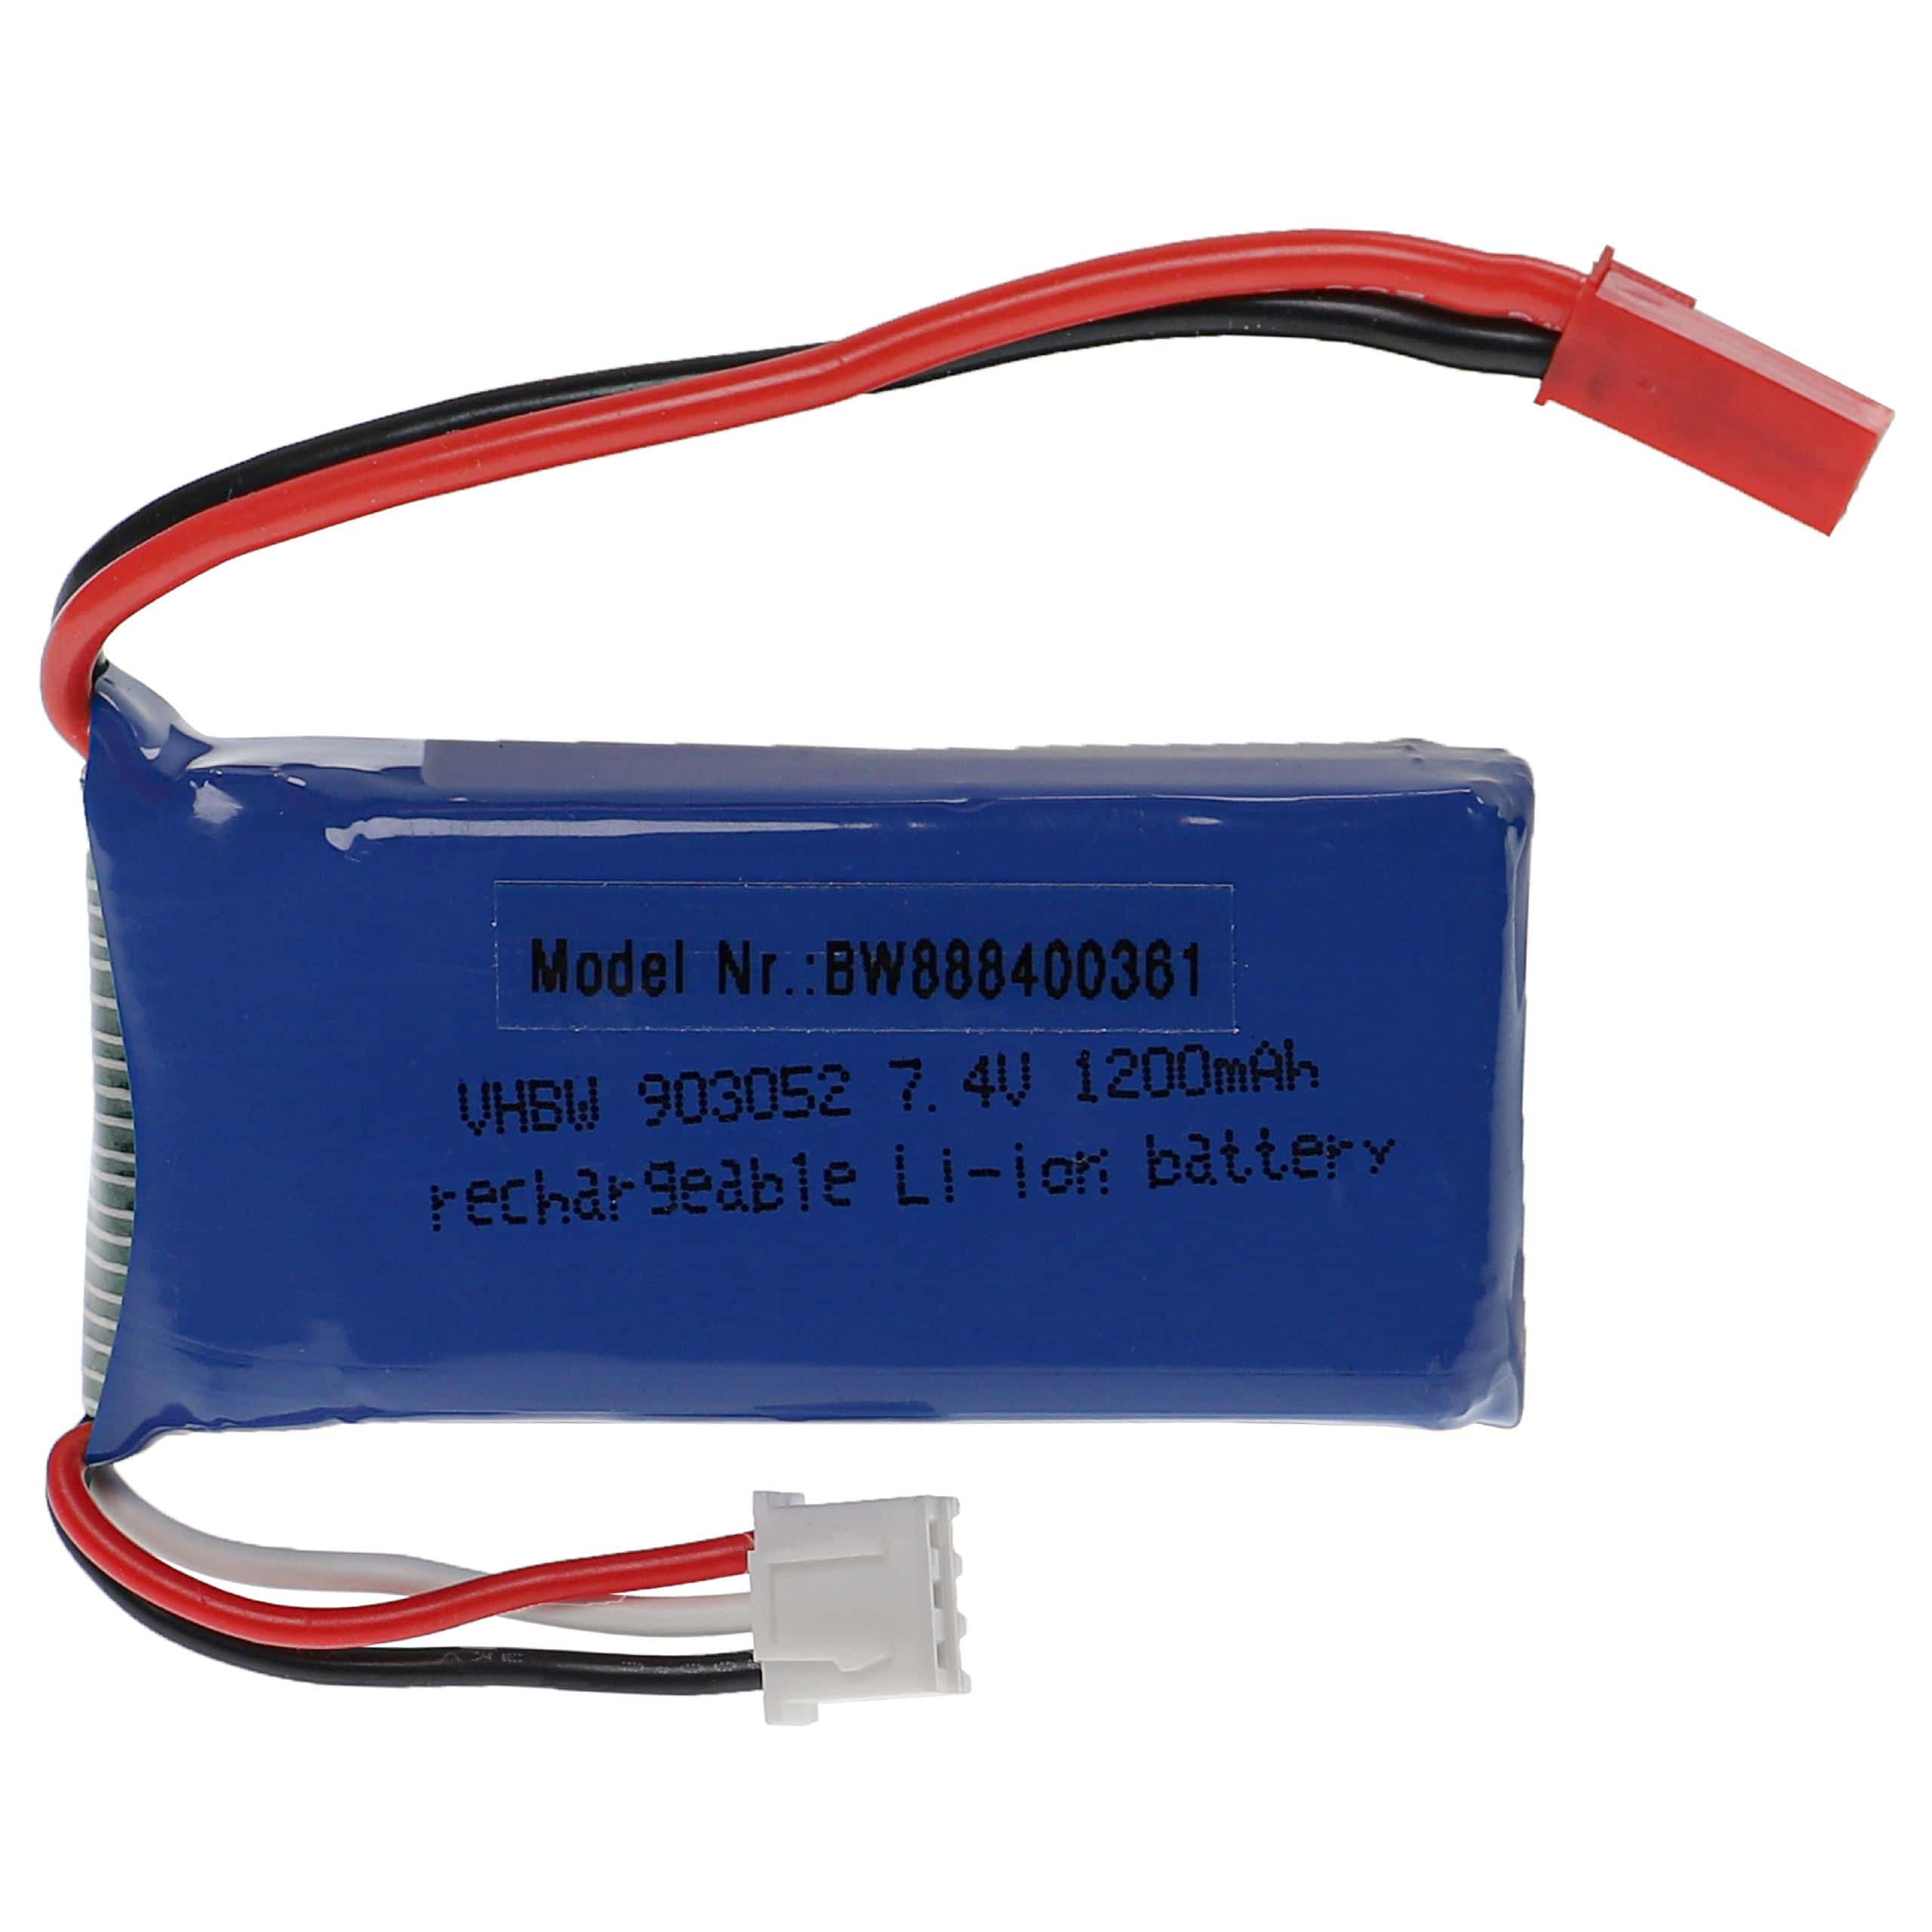 Model Making Device Replacement Battery - 1200mAh 7.4V Li-polymer, BEC